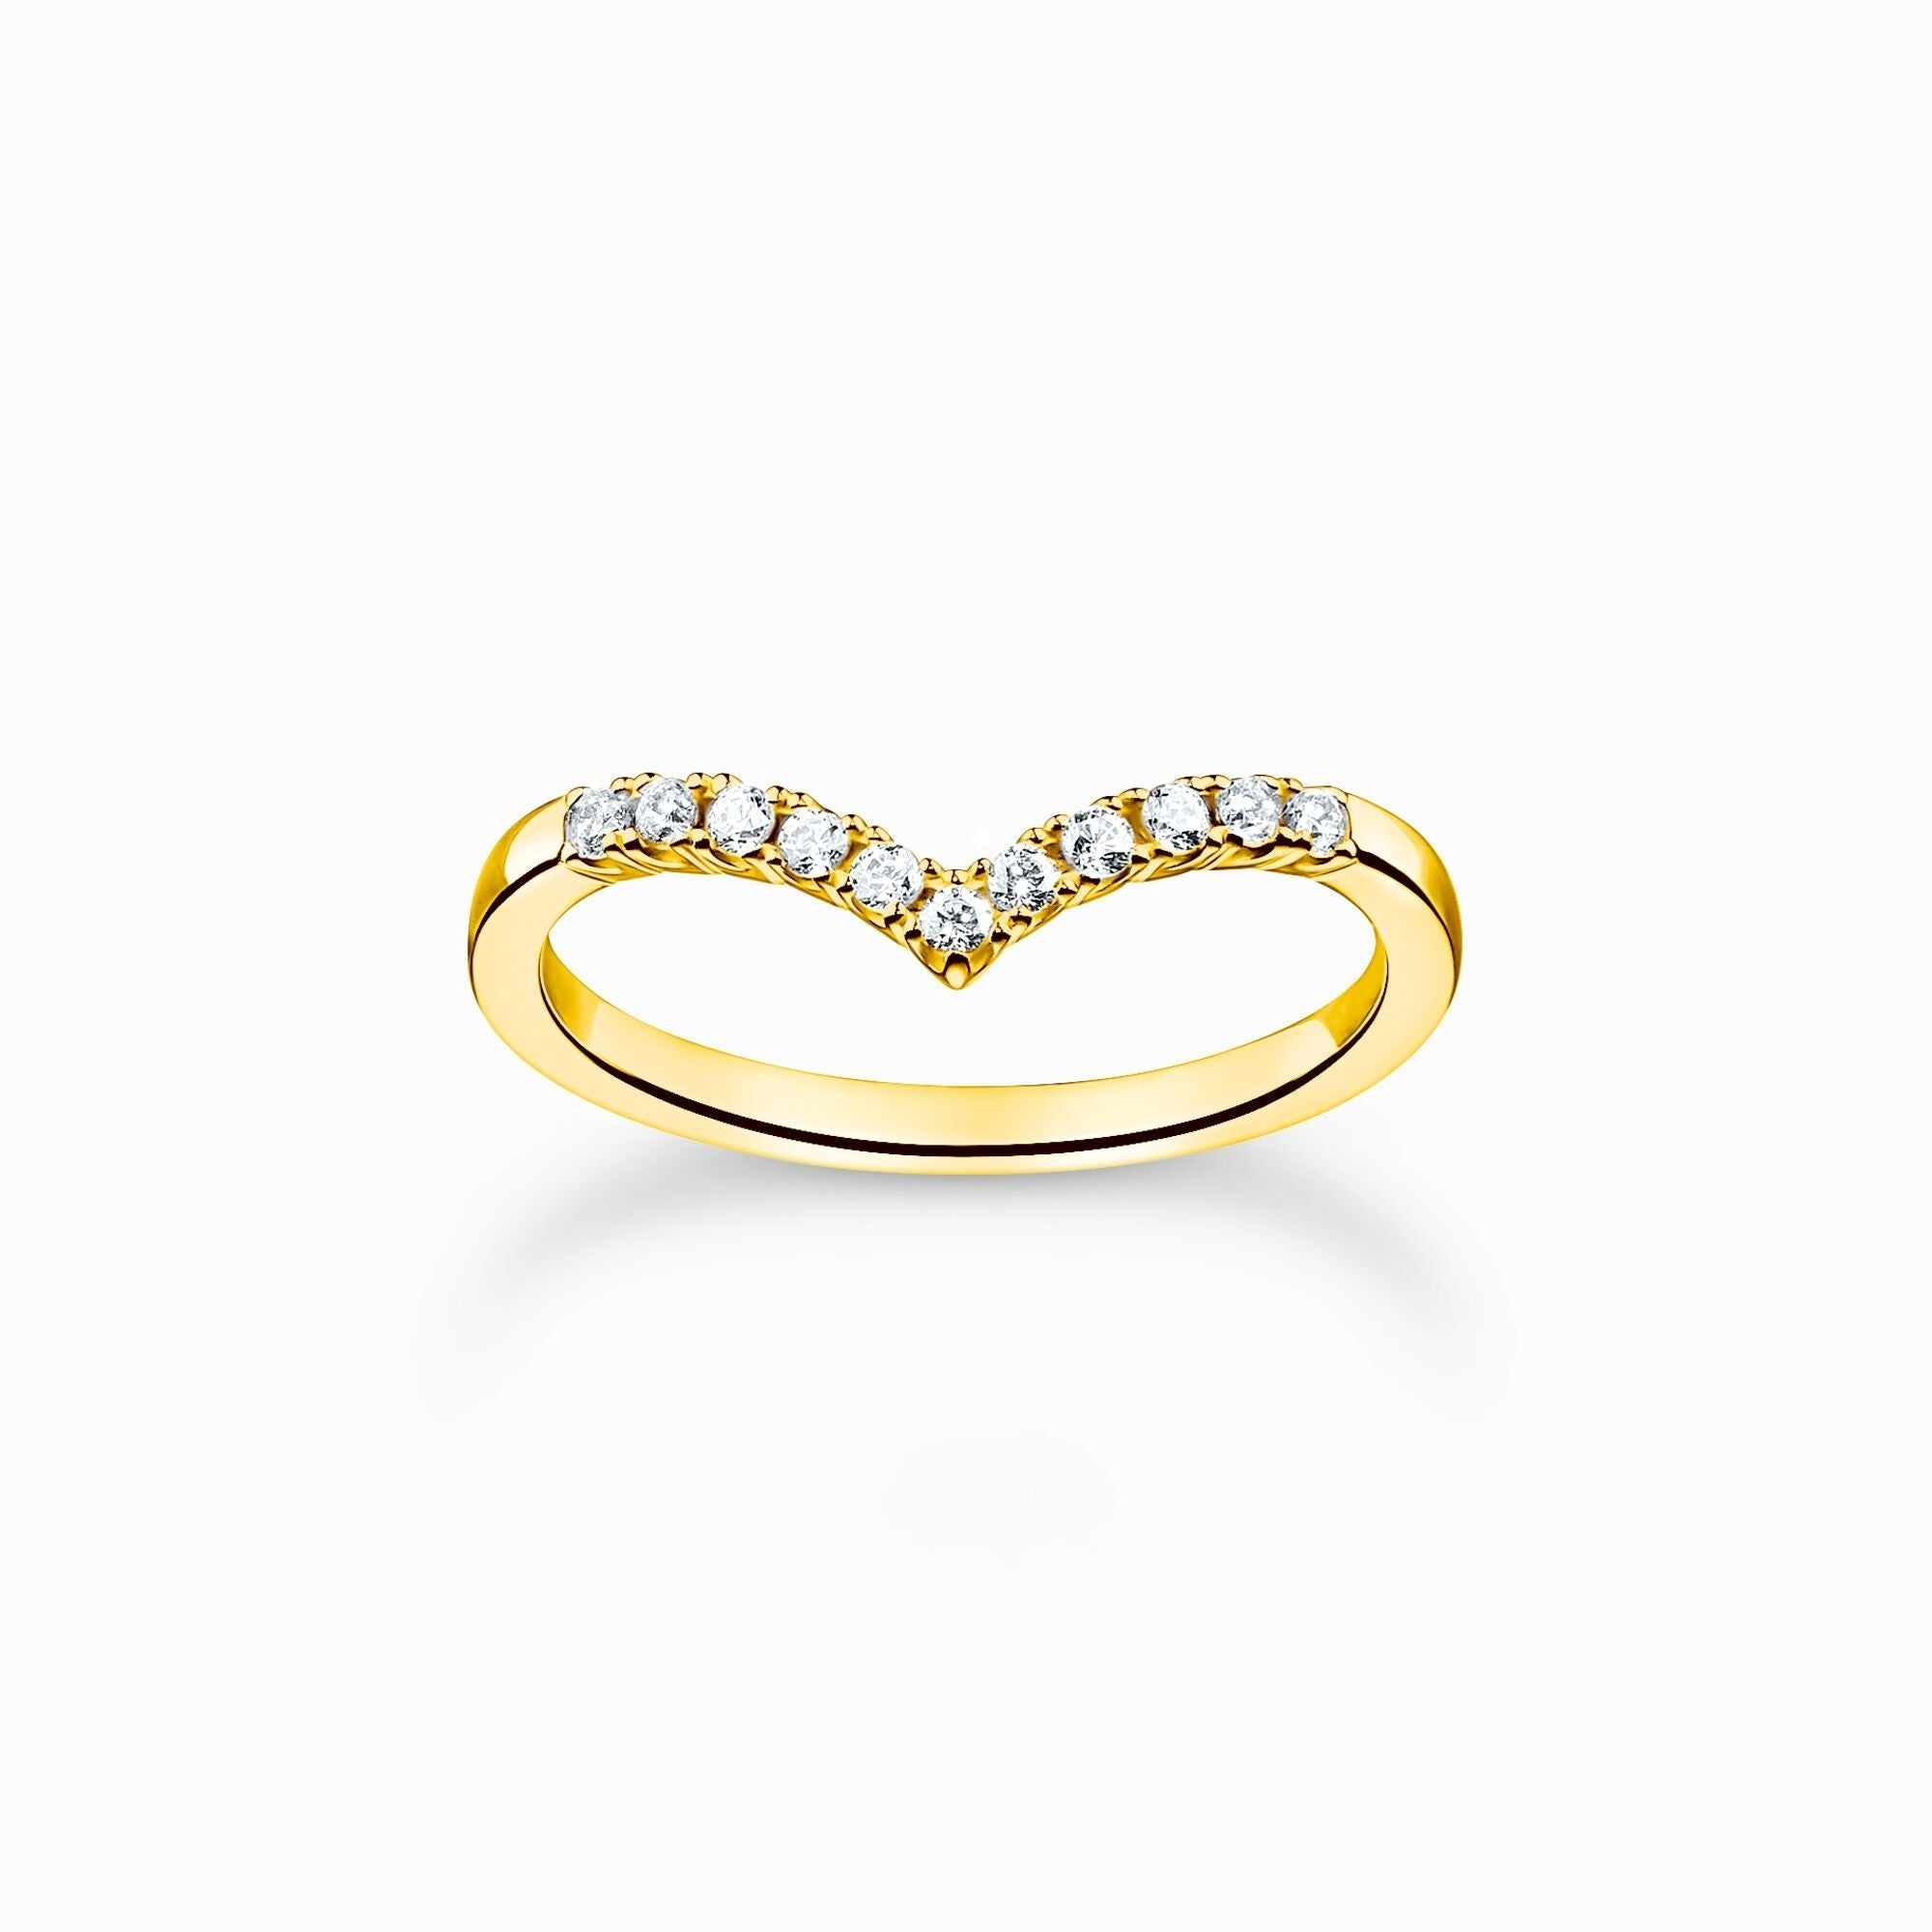 Thomas Sabo Charm Club Yellow Gold Plated Sterling Silver V-Shape Ring